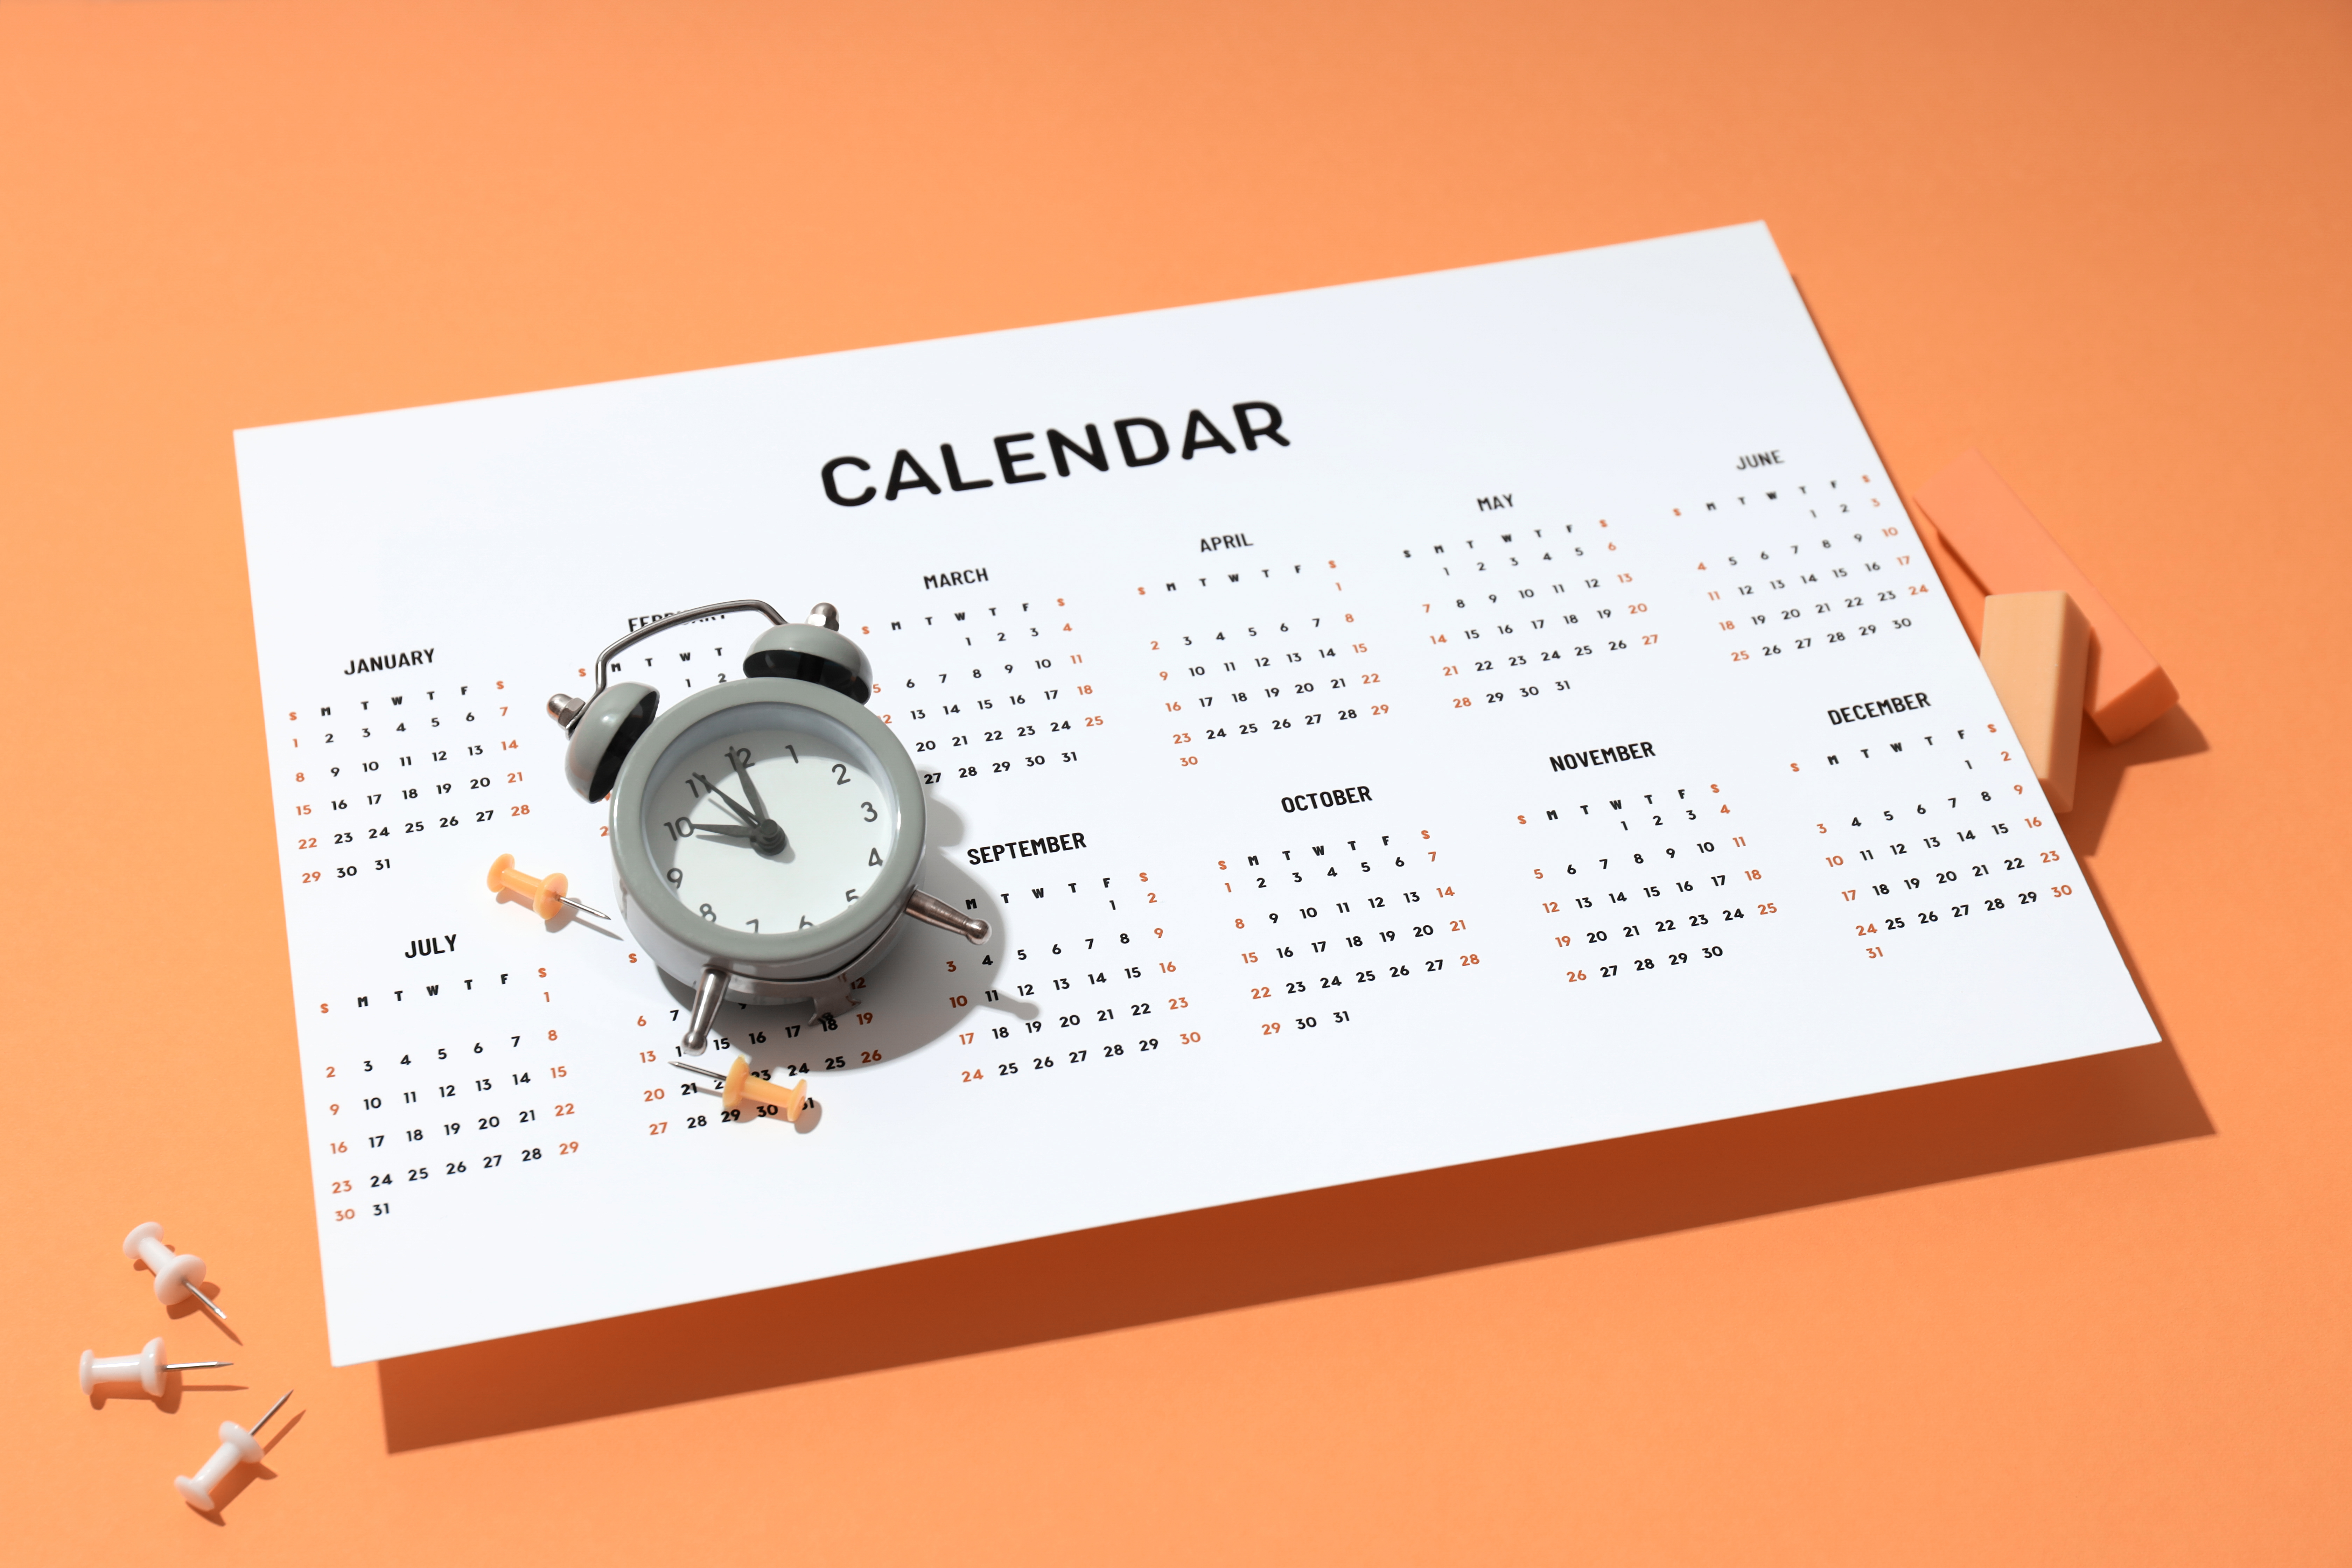 Calendar with alarm clock image